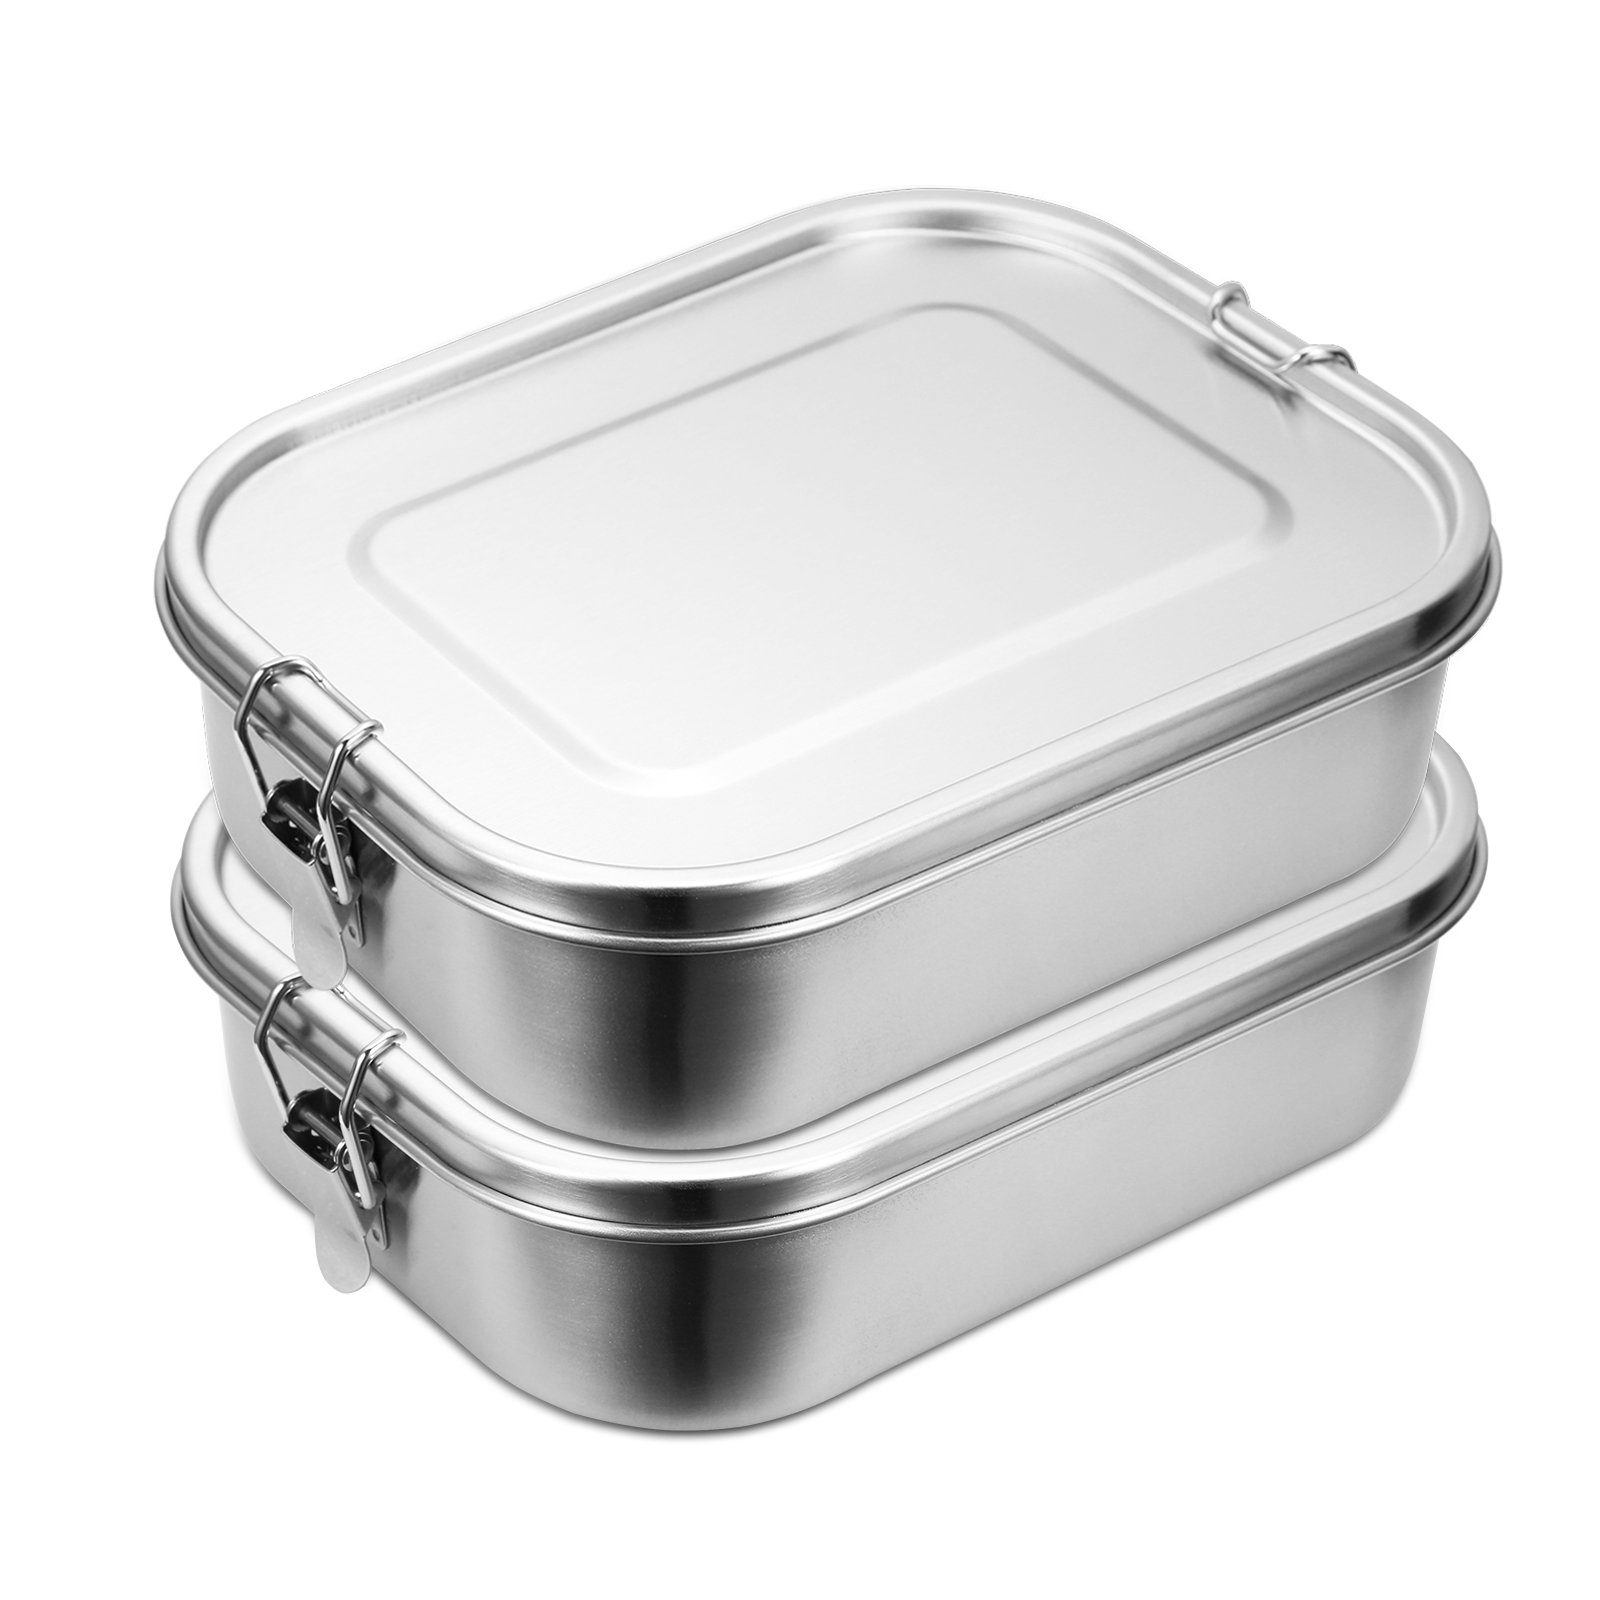 Gimisgu Lunchbox 800-1400ml Edelstahl 2X800ml Lunchbox Dicht Silber Thermo edelstahl Brotdose Büro